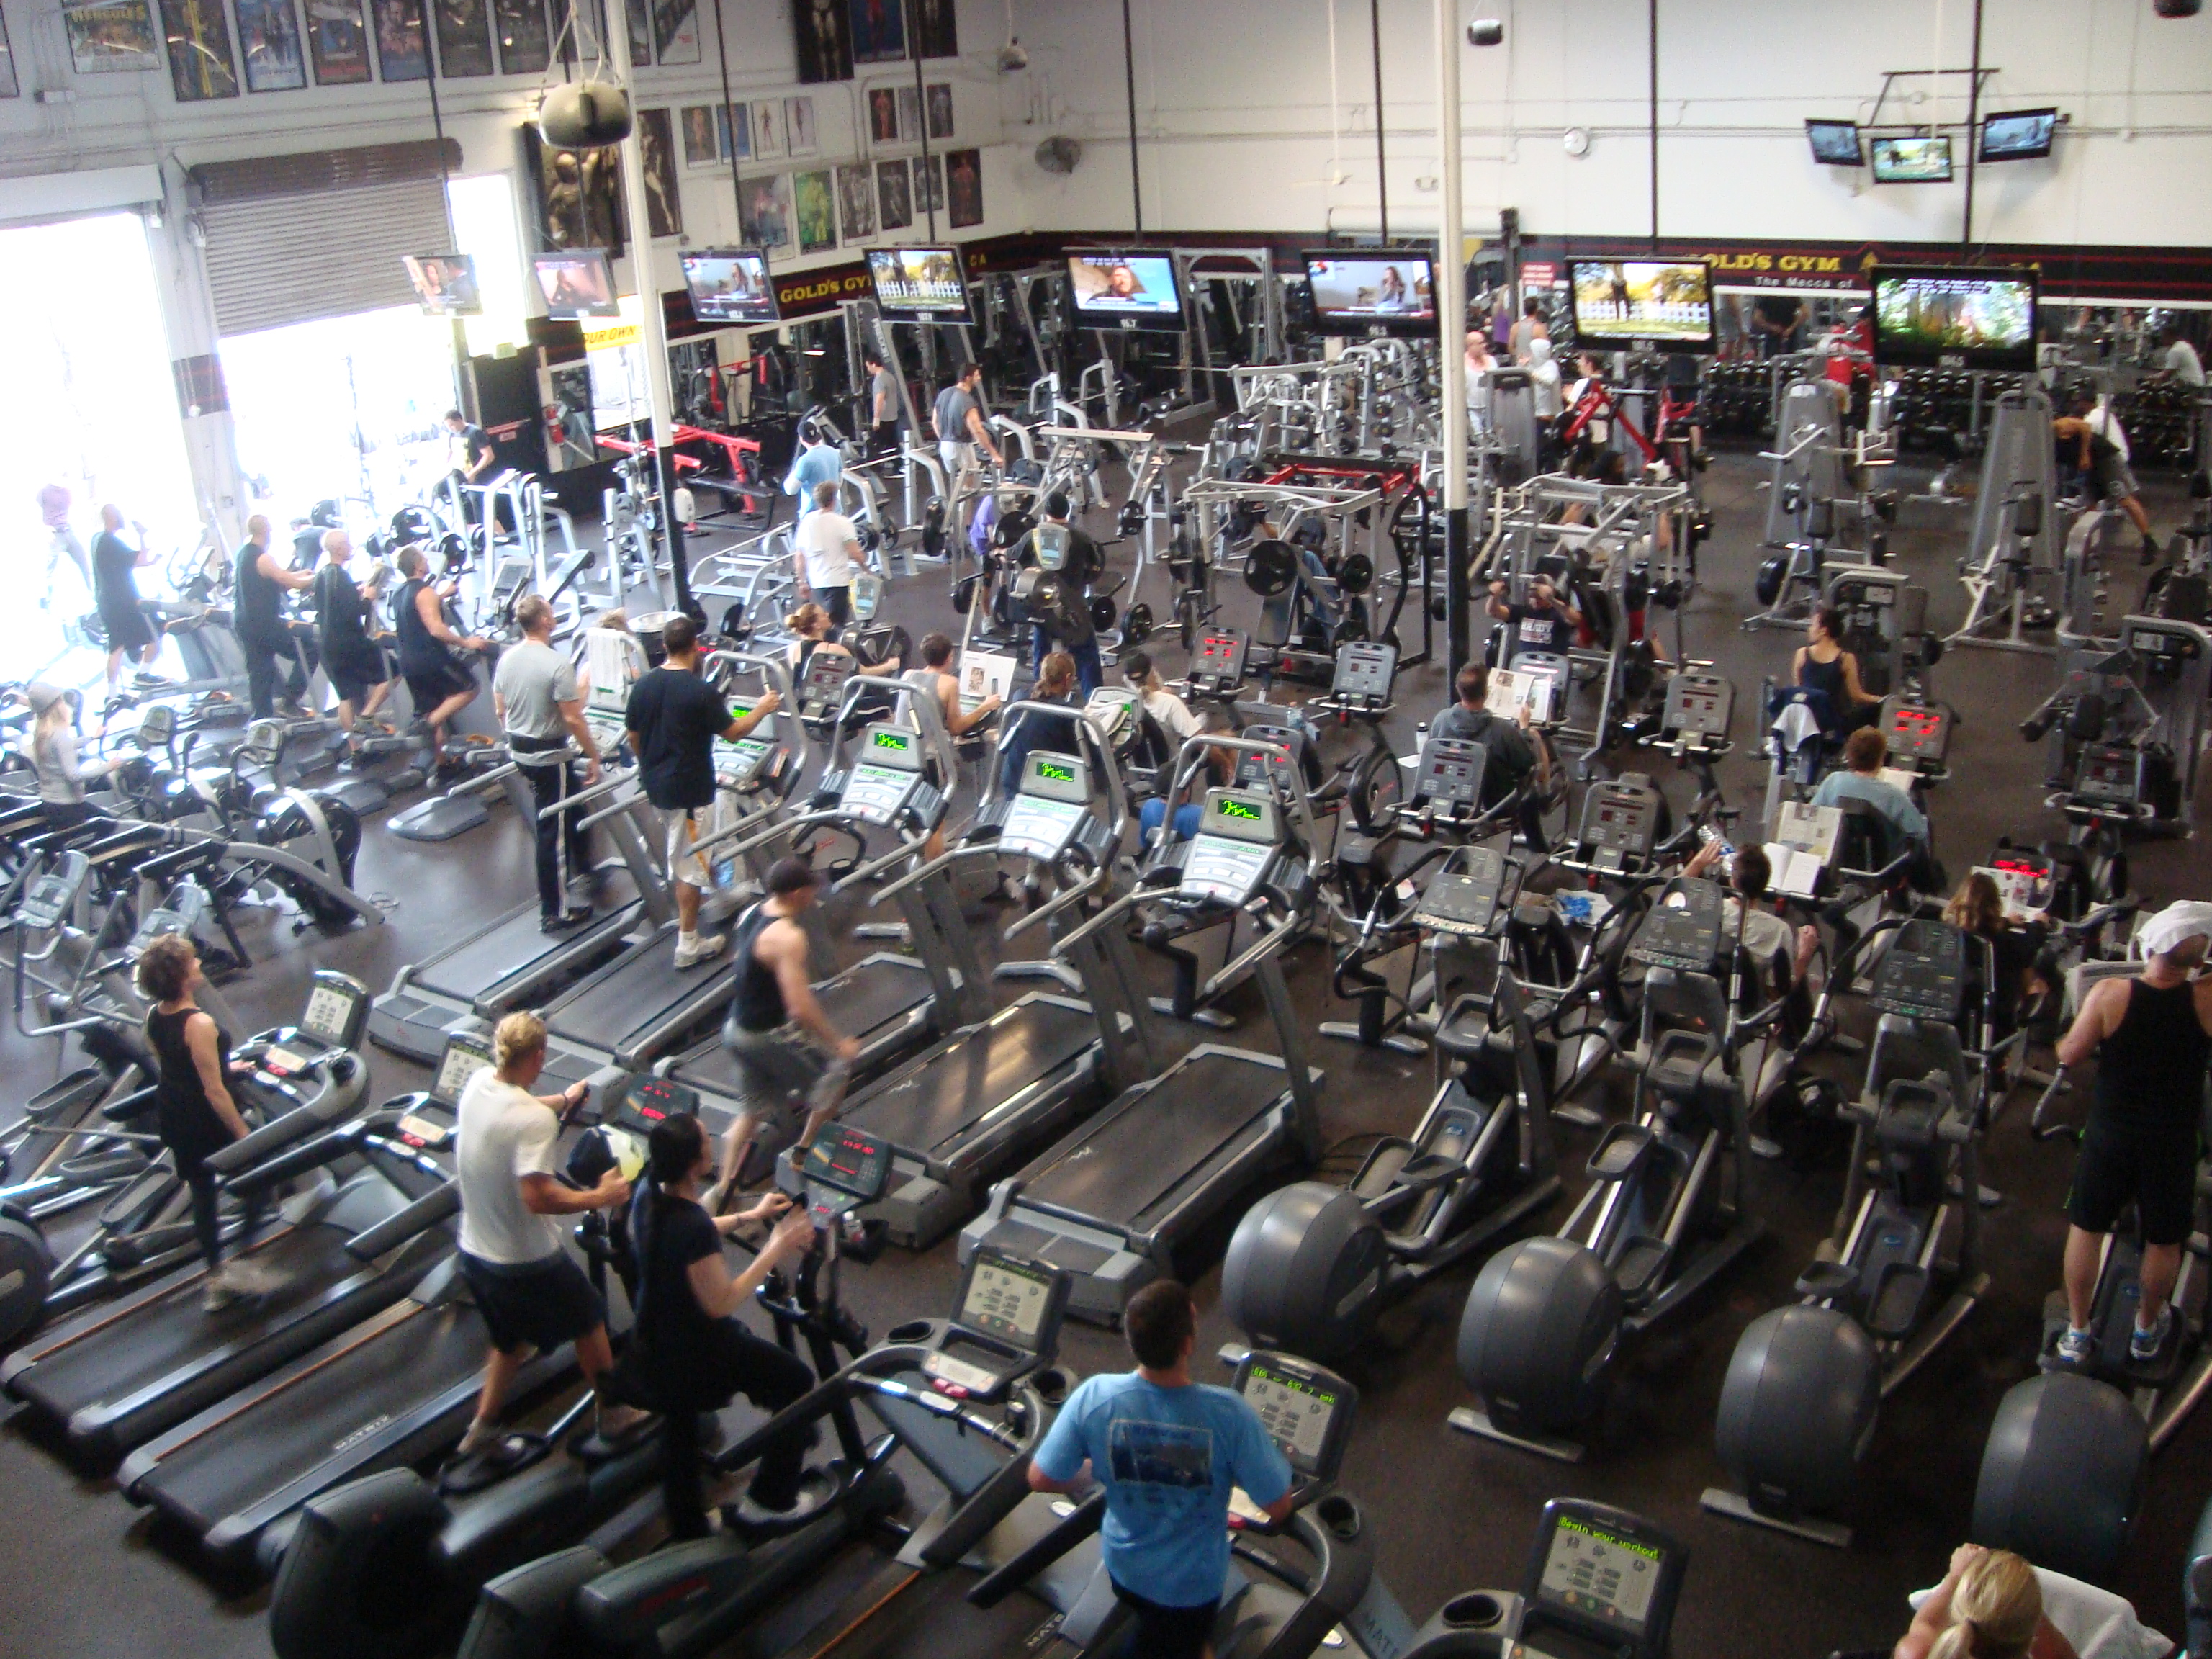 Gold’s Gym - Venice, CA: The Mecca of Bodybuilding.